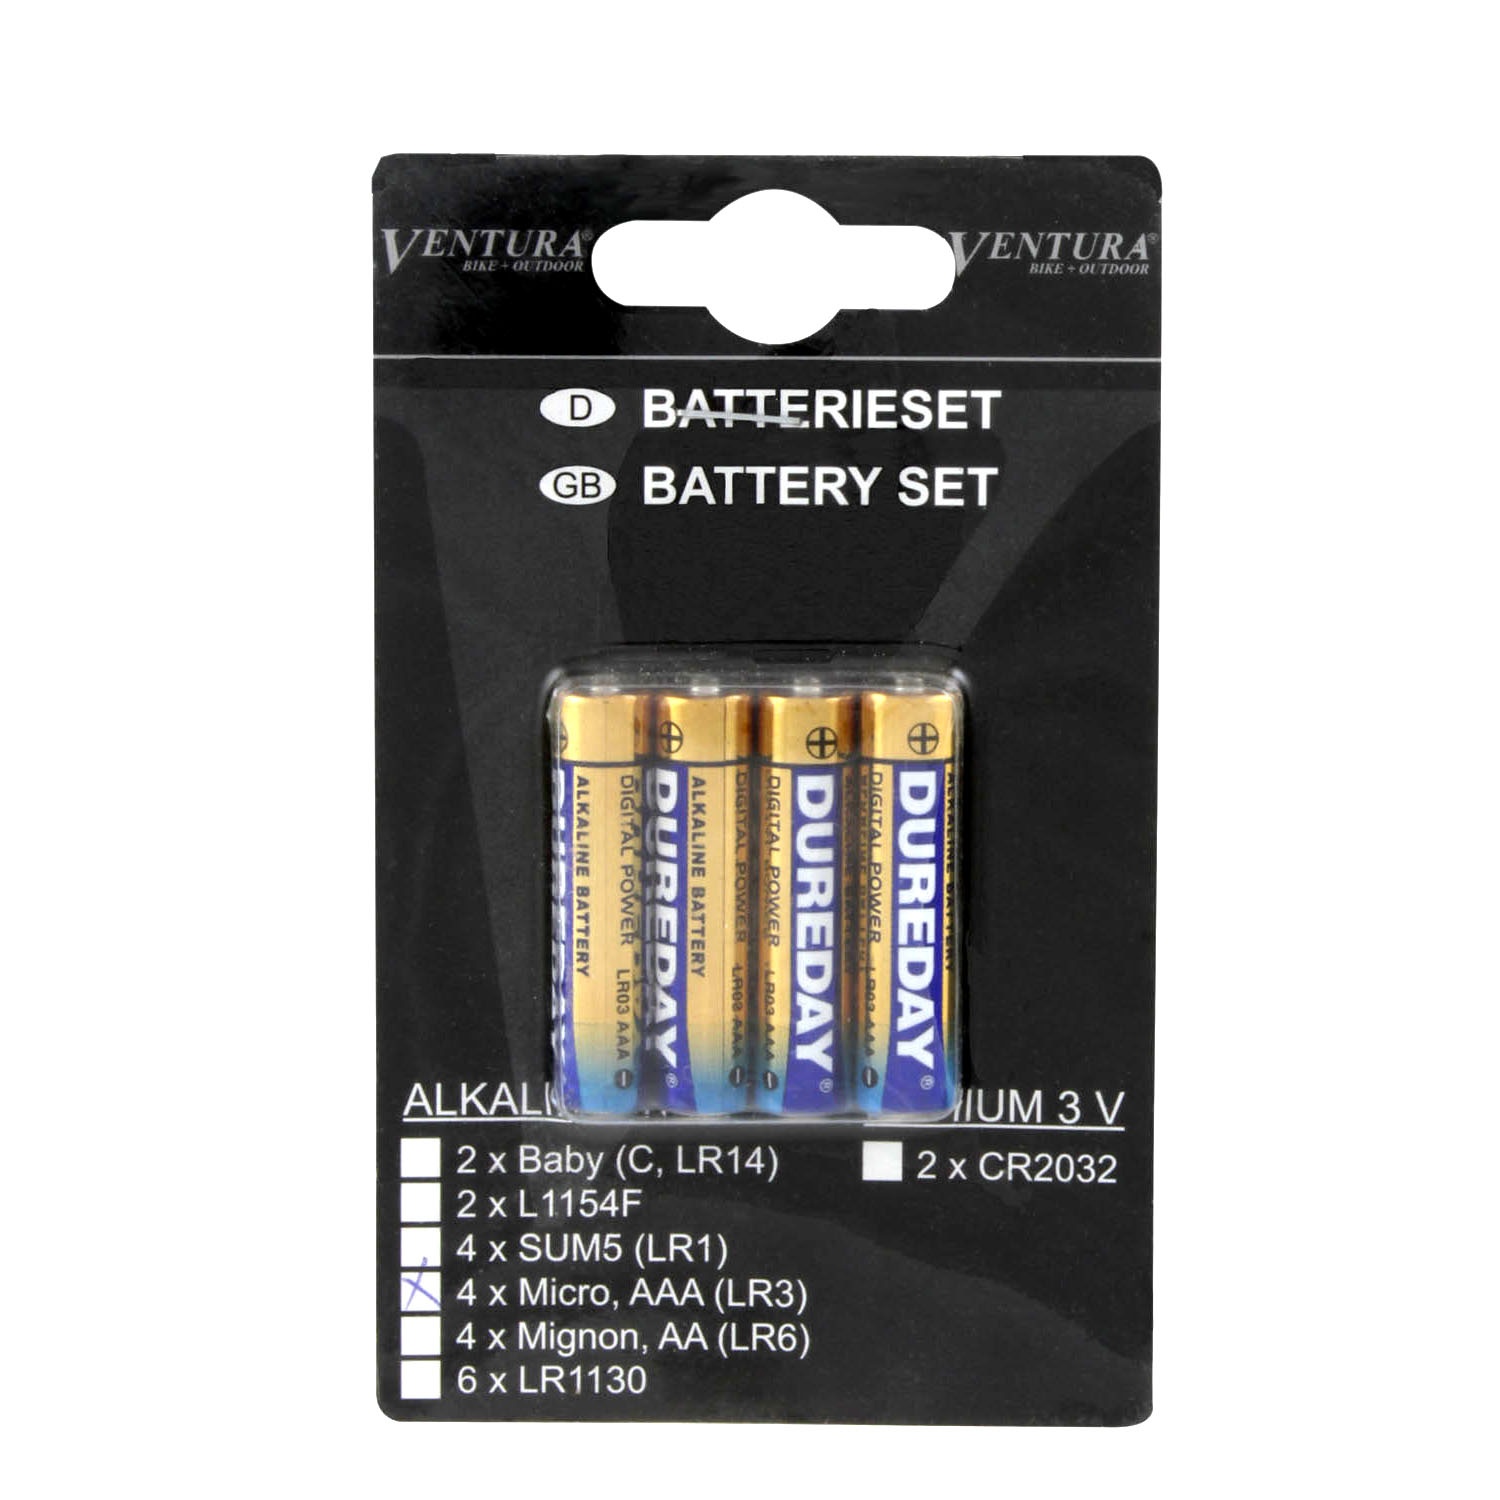 battery store ventura